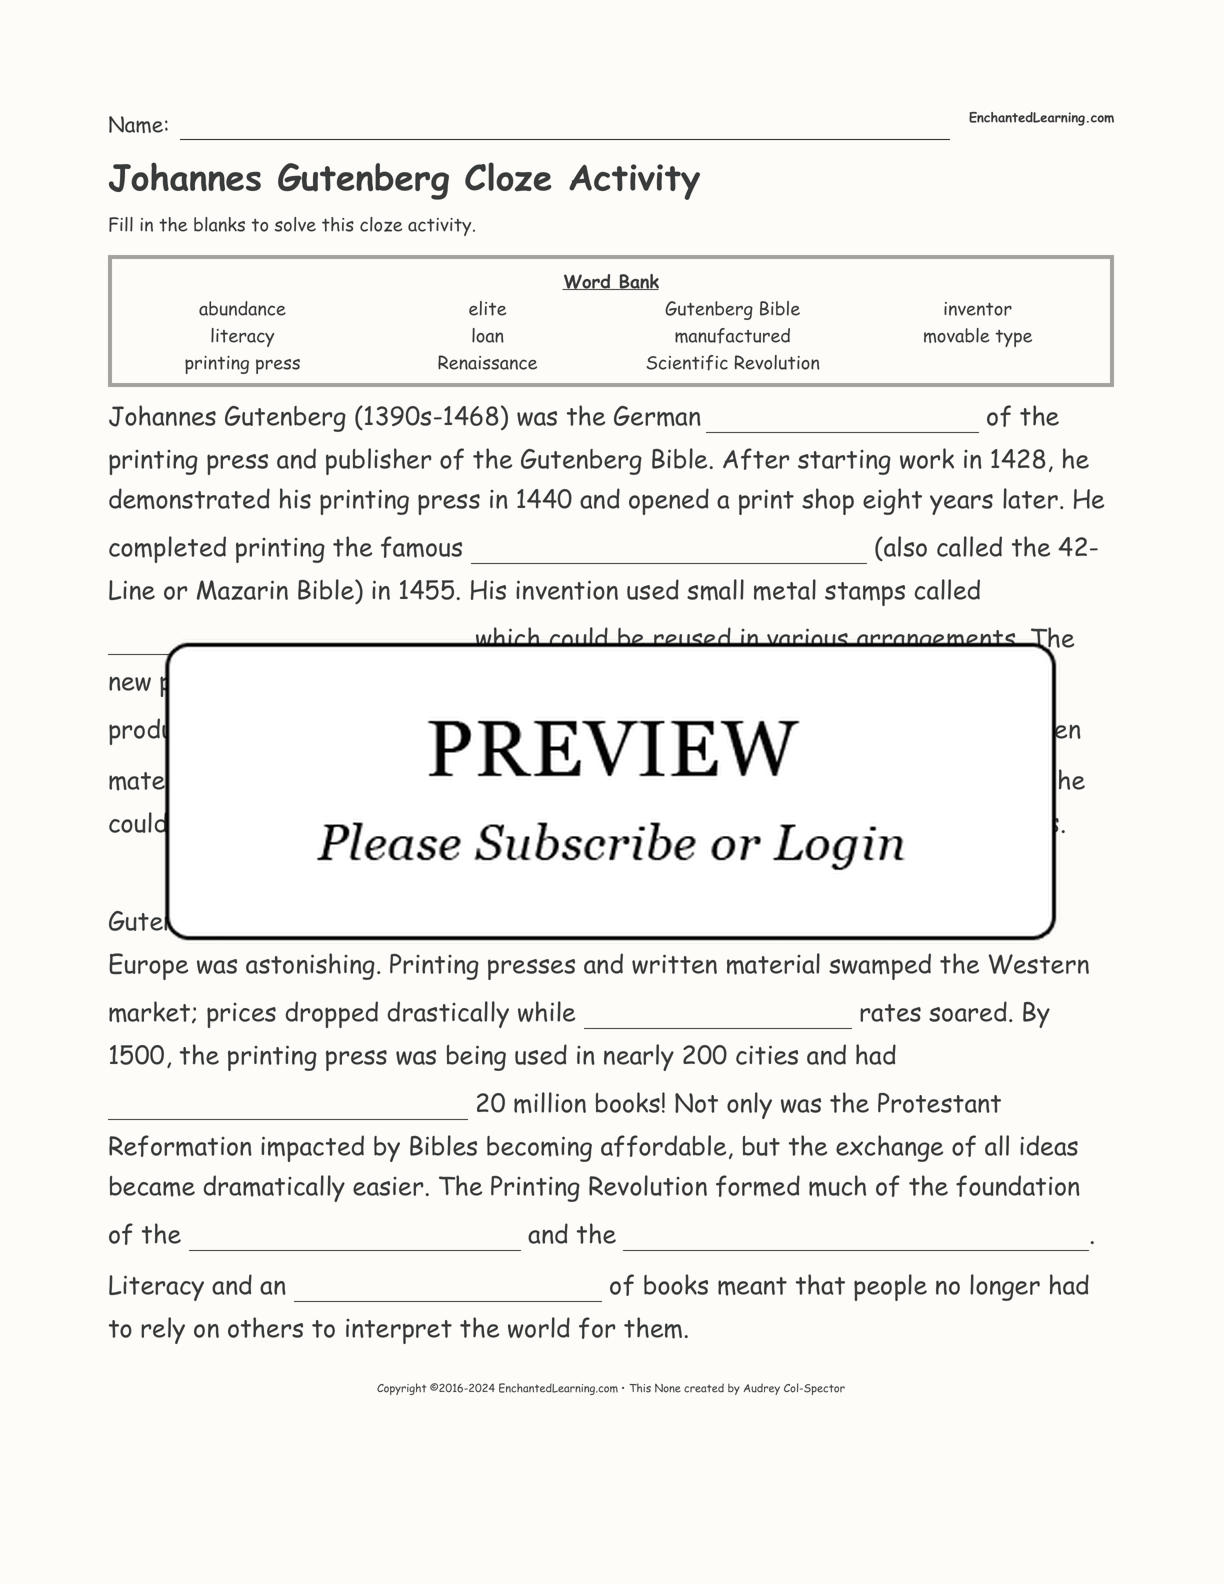 Johannes Gutenberg Cloze Activity interactive worksheet page 1